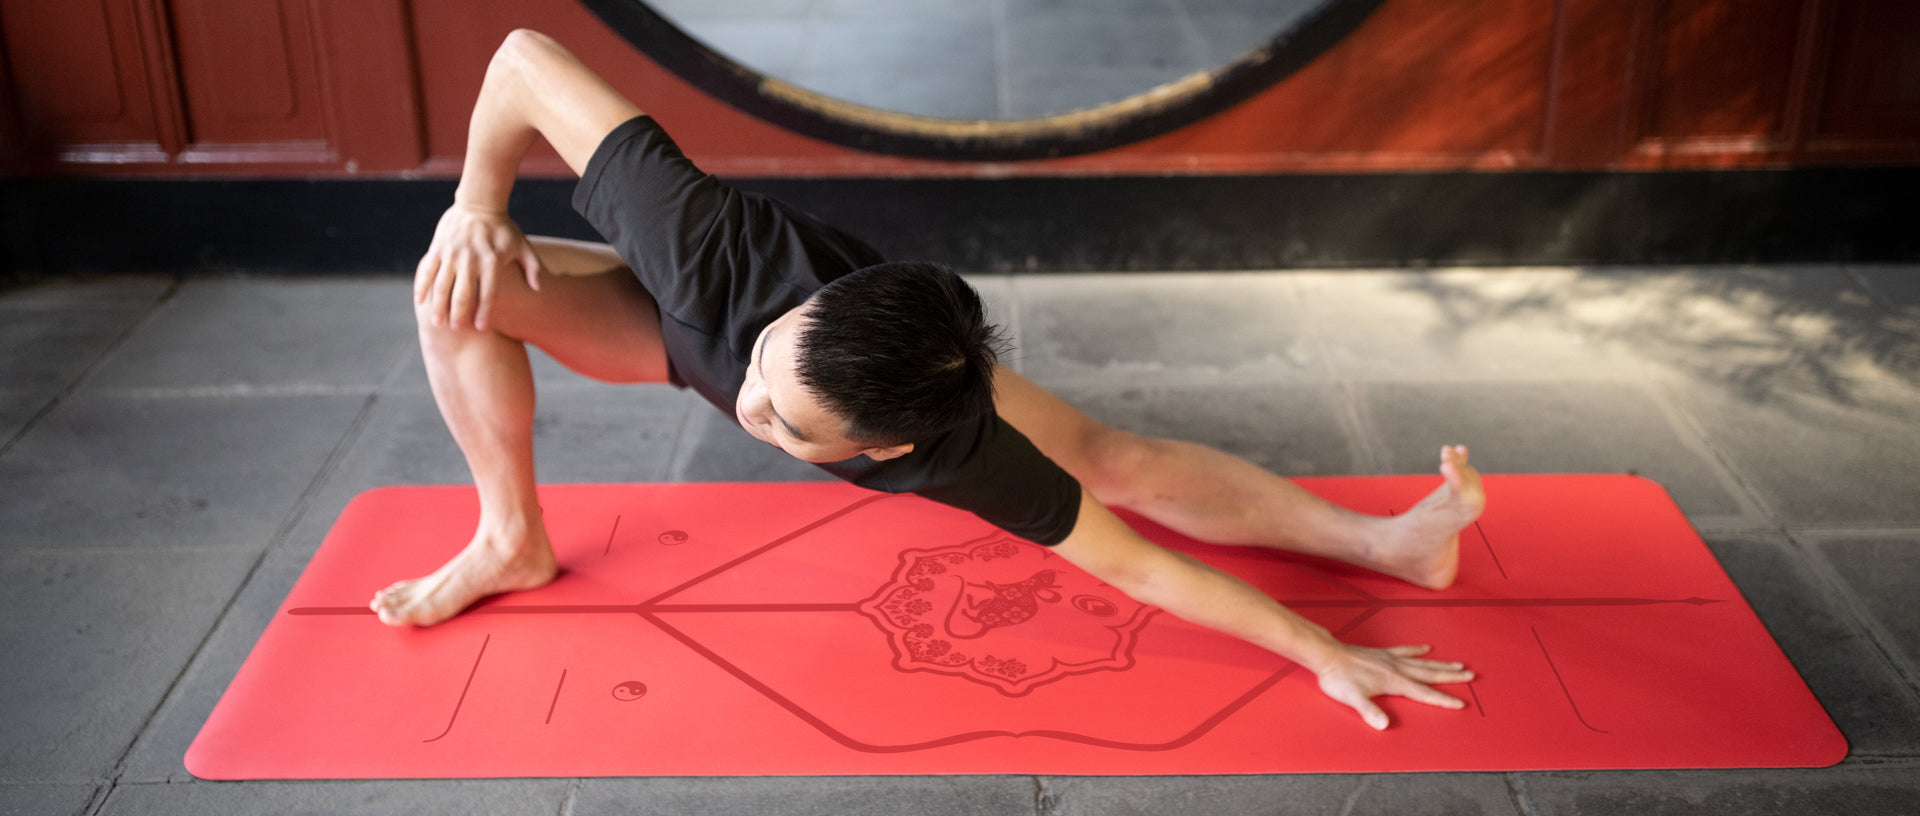 Wellness Review of the Liforme Yoga Mat